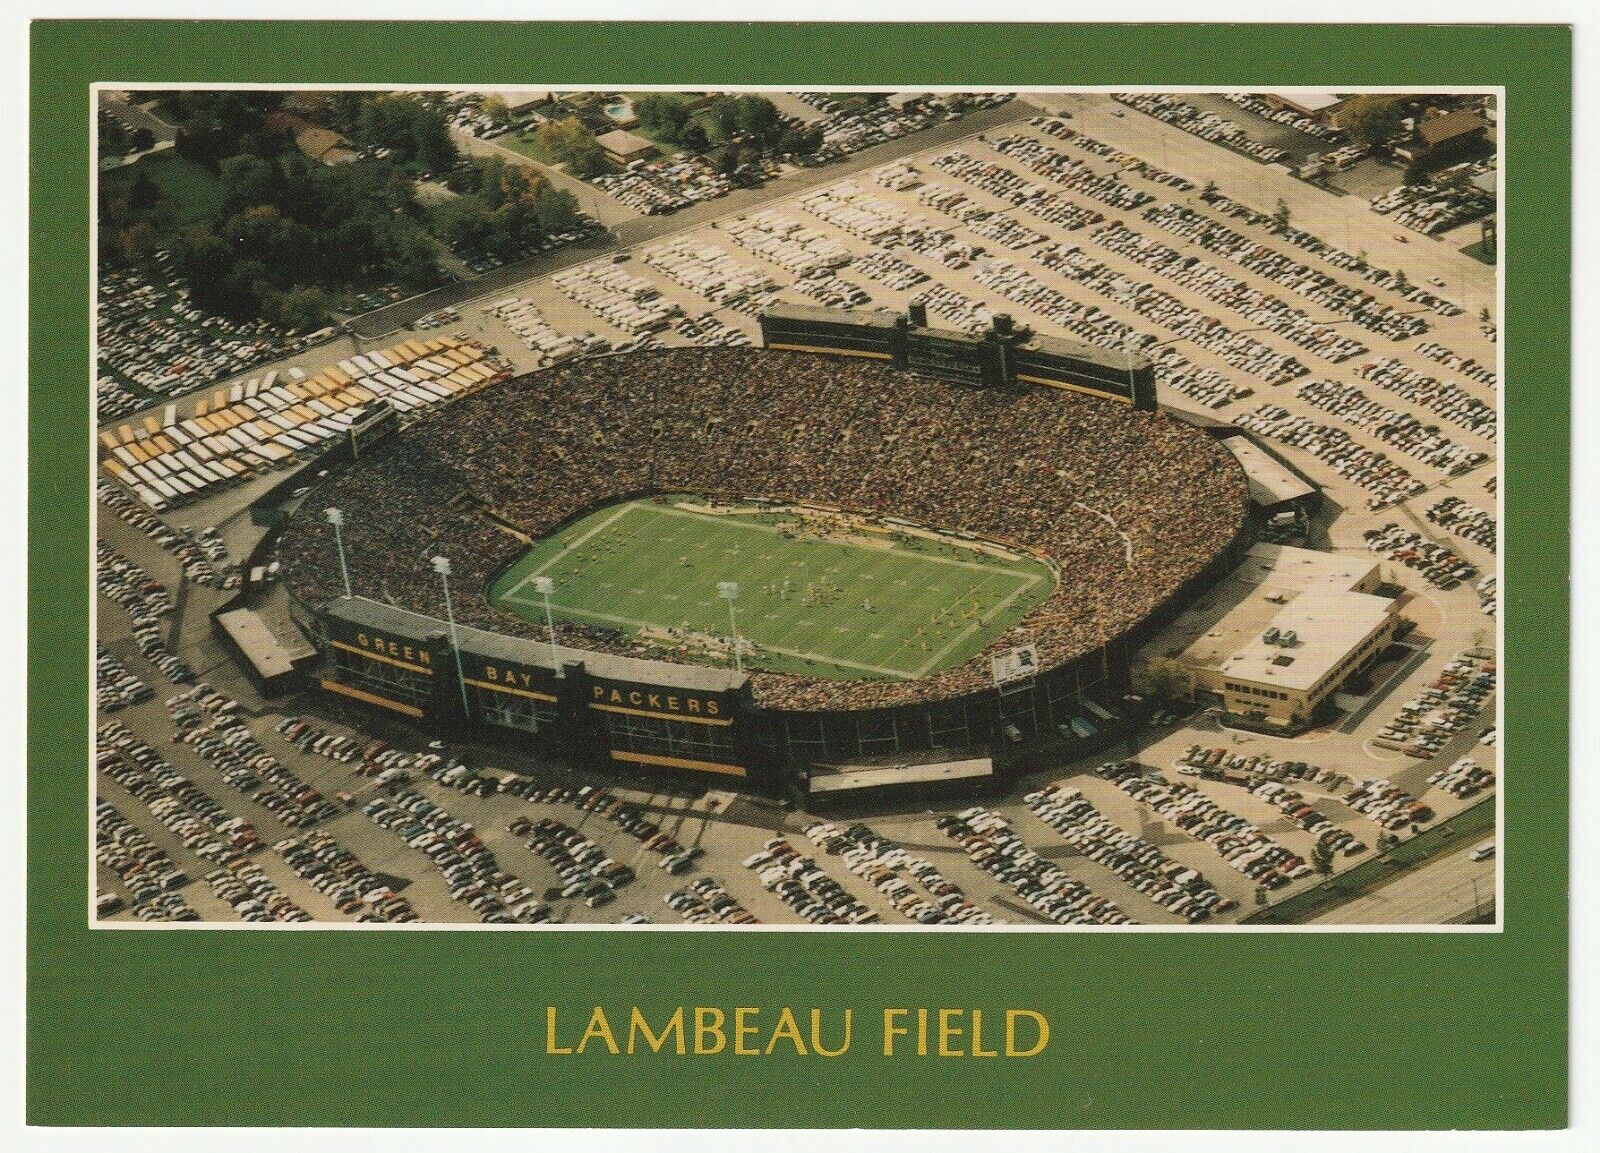 Ultra Scarce Green Bay Packers Lambeau Field Football Stadium Postcard